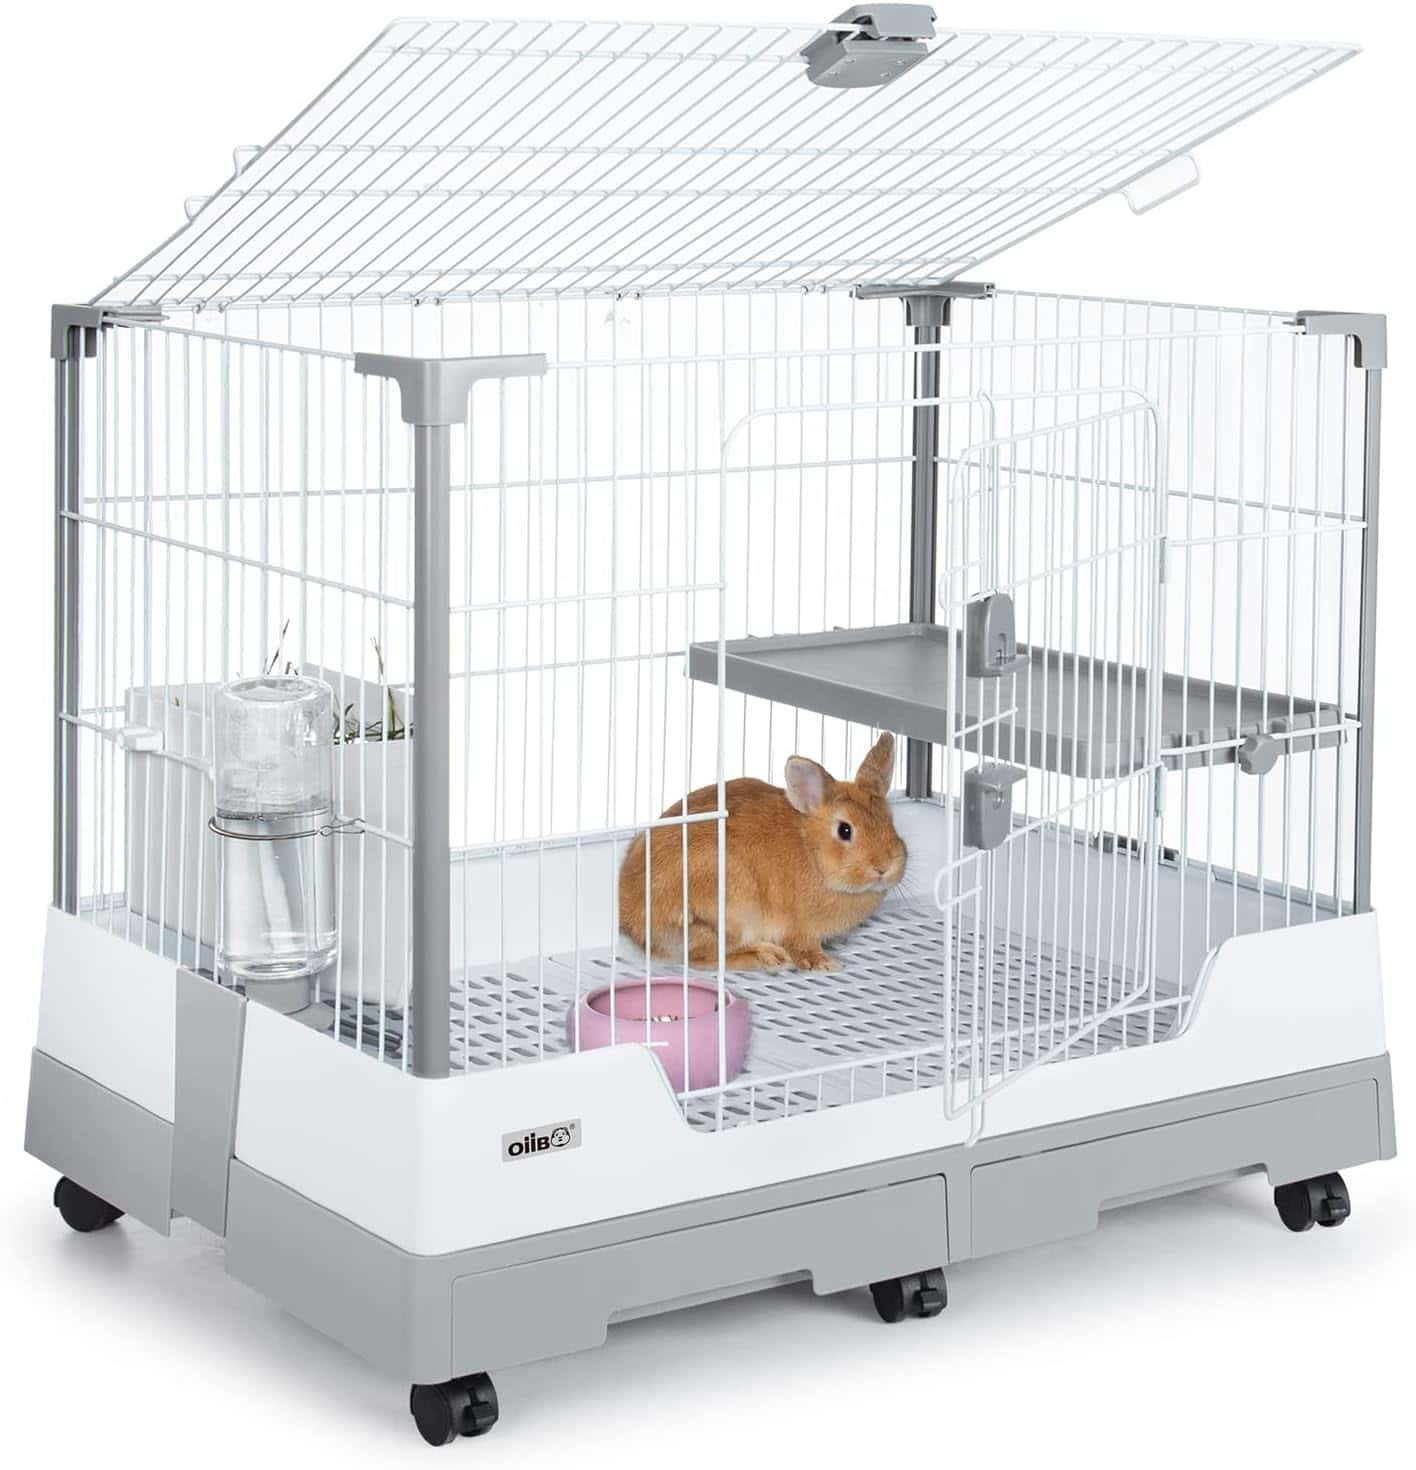 OIIBO Small Animal Cage for Rabbit